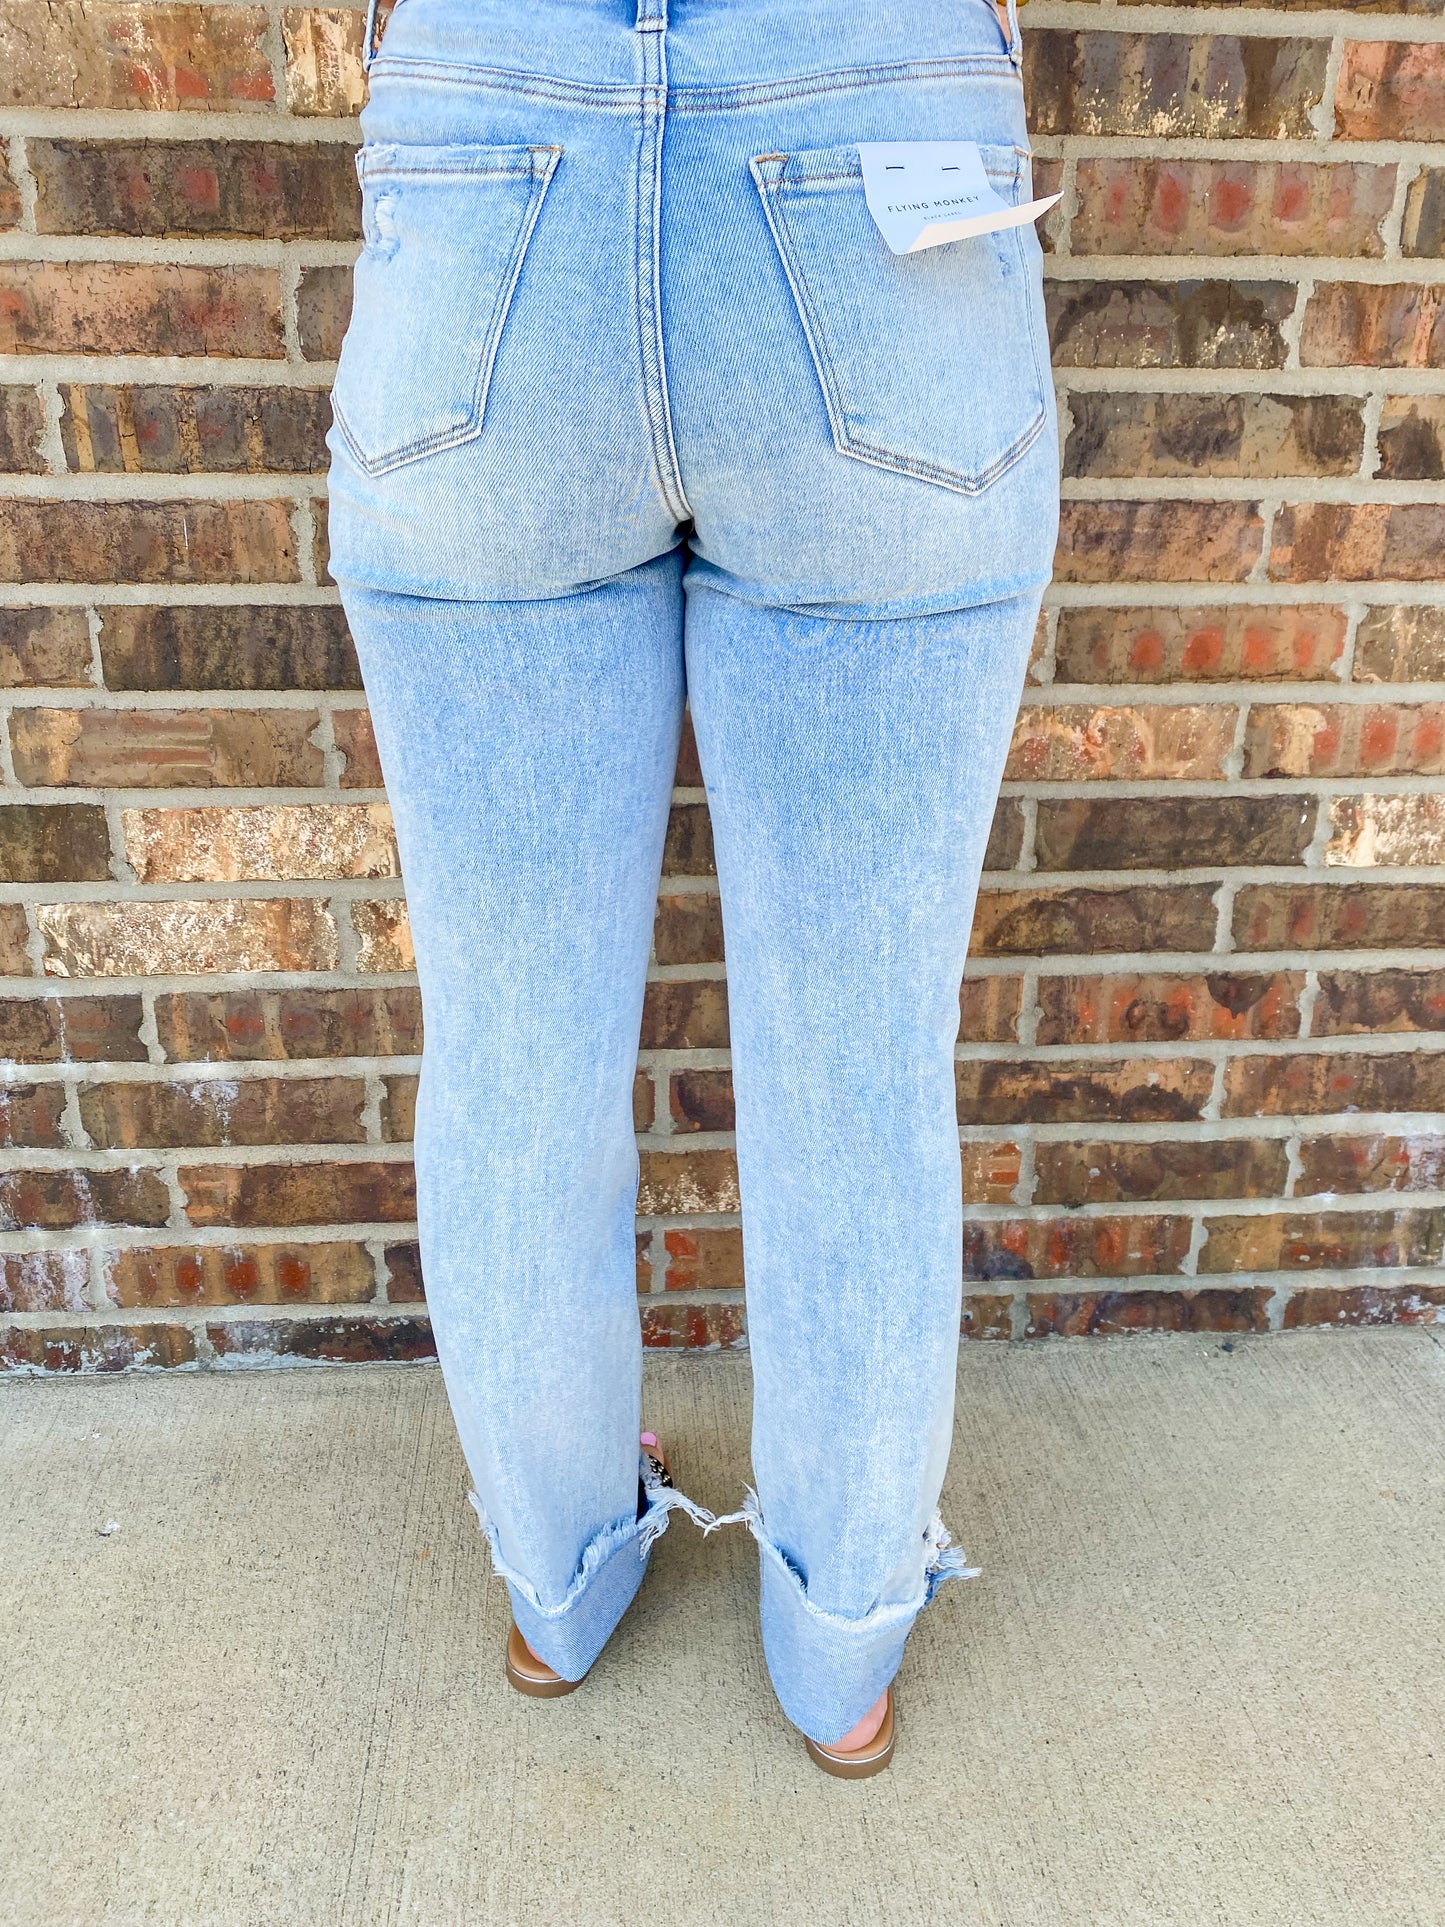 Evie's Slim Straight Jeans